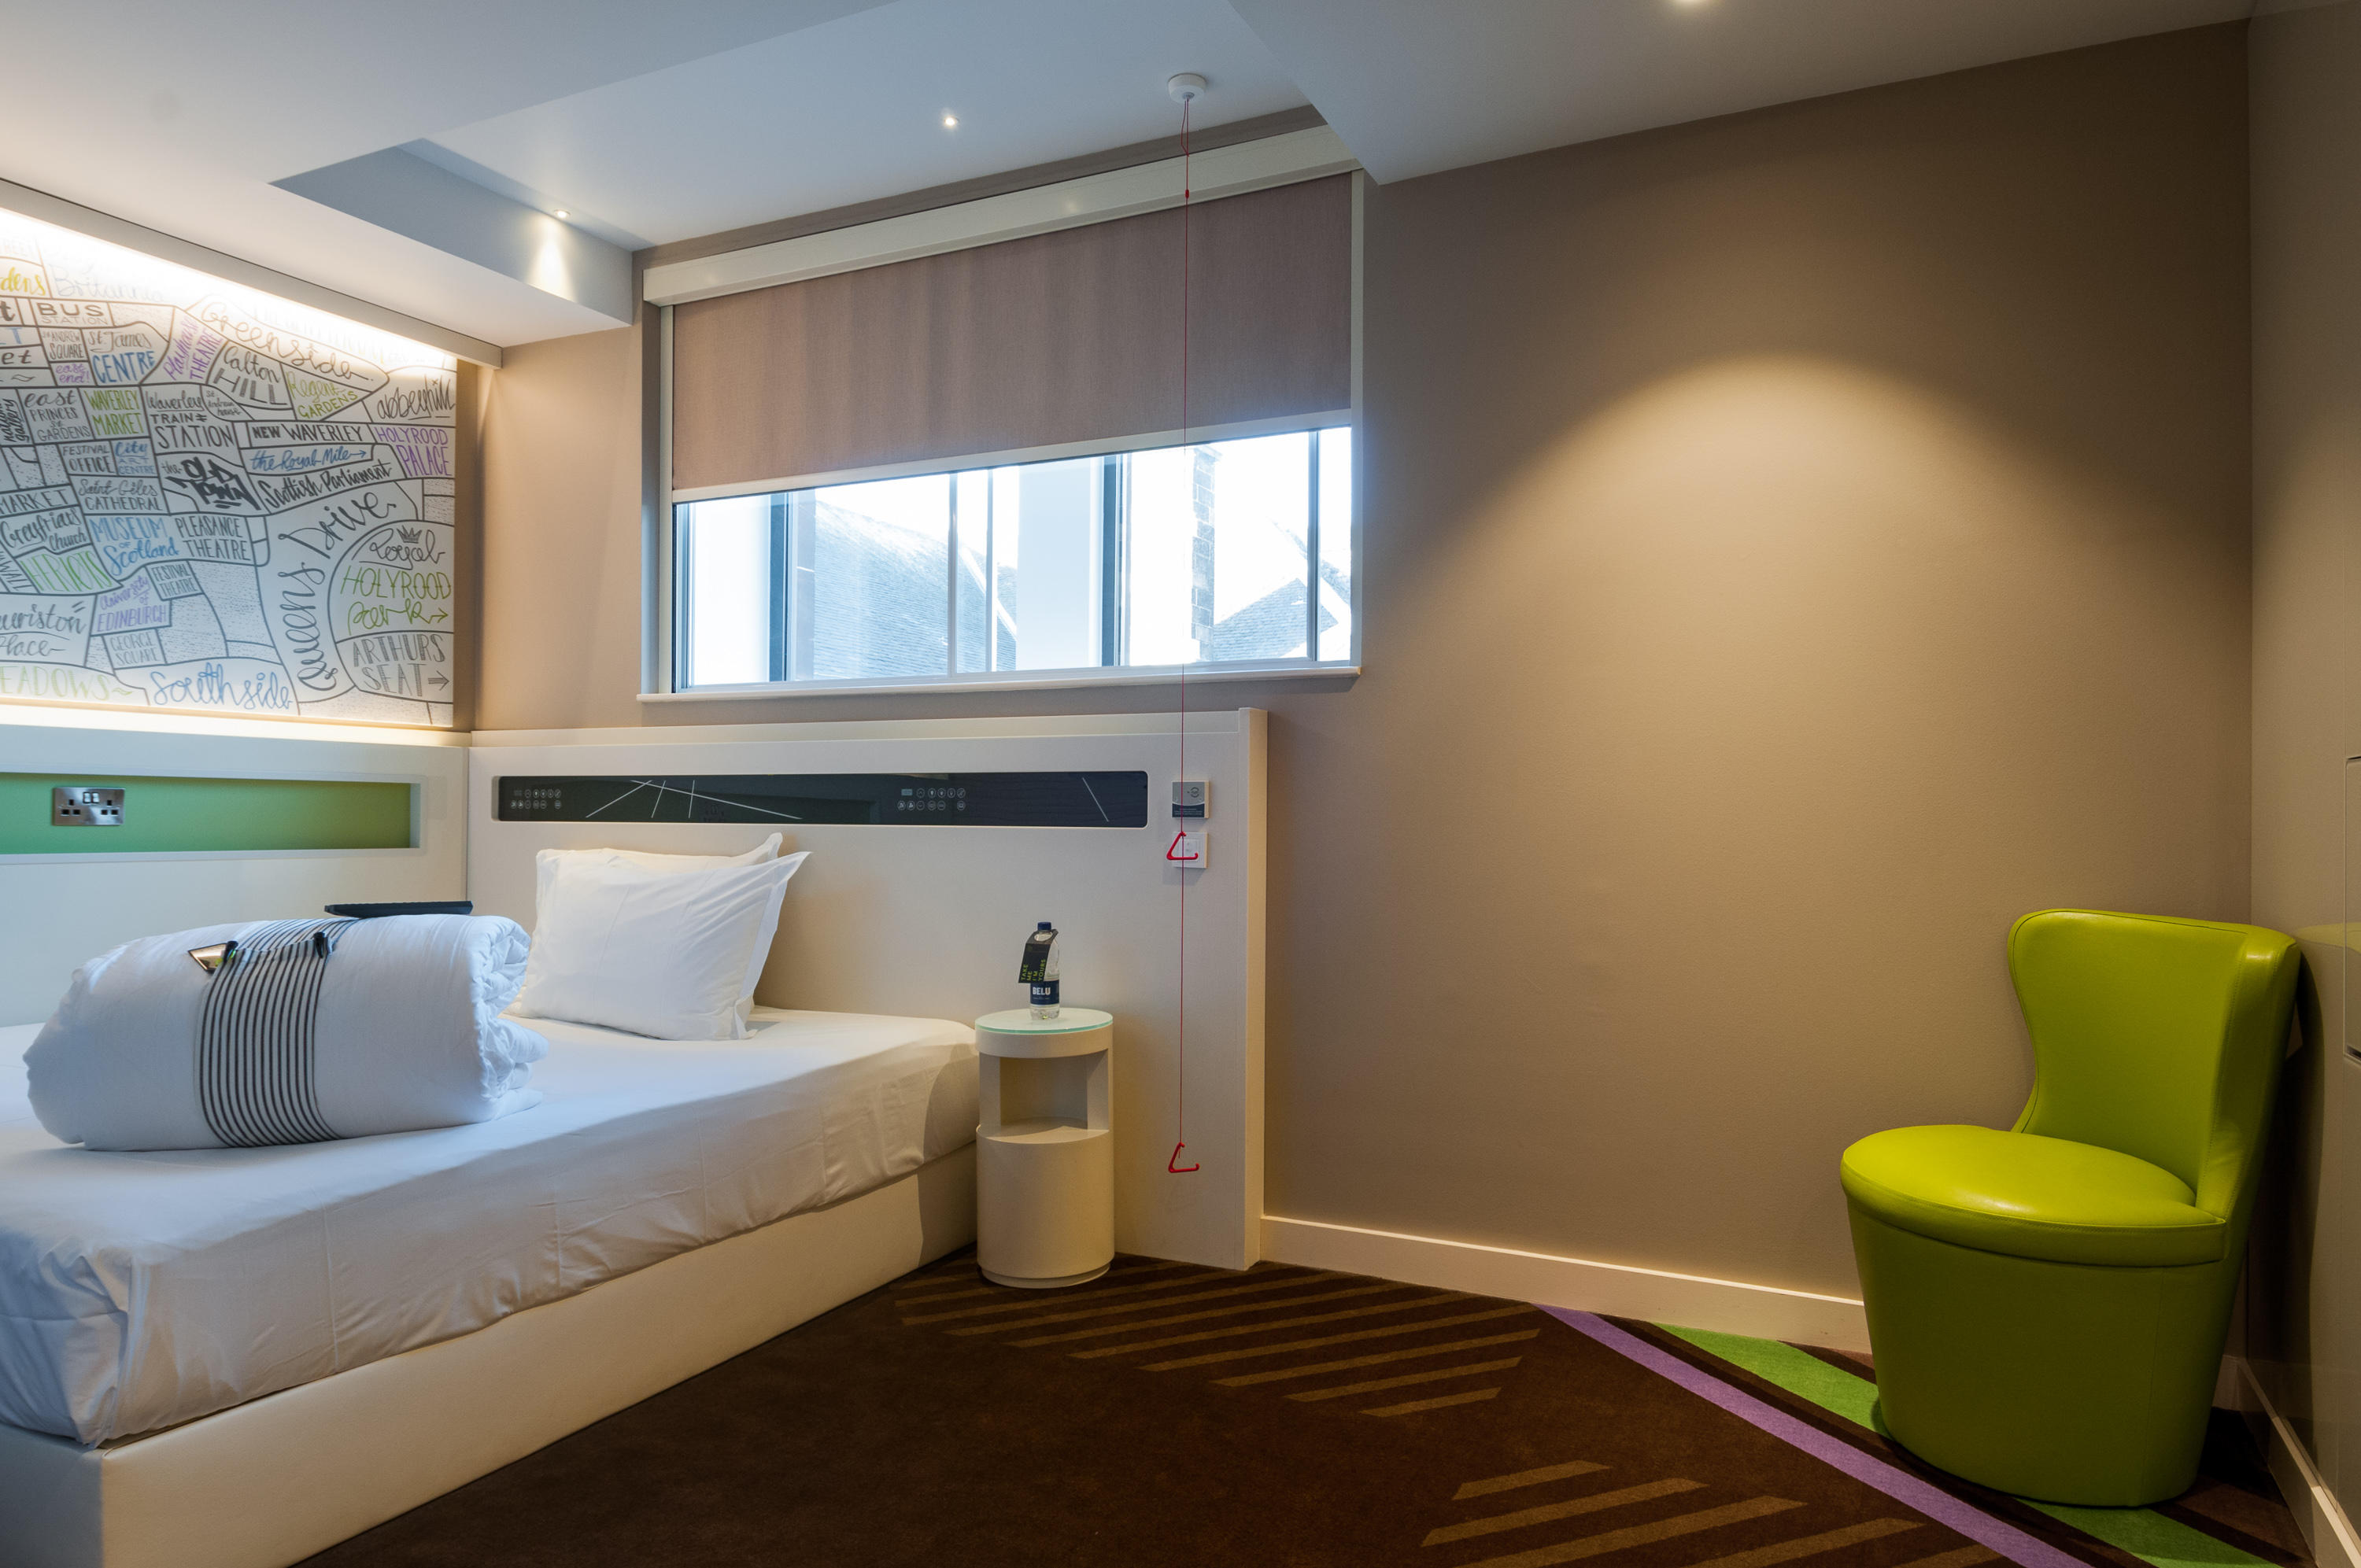 hub by Premier Inn bedroom hub by Premier Inn Edinburgh City Centre (Rose Street) hotel Edinburgh 03333 213104